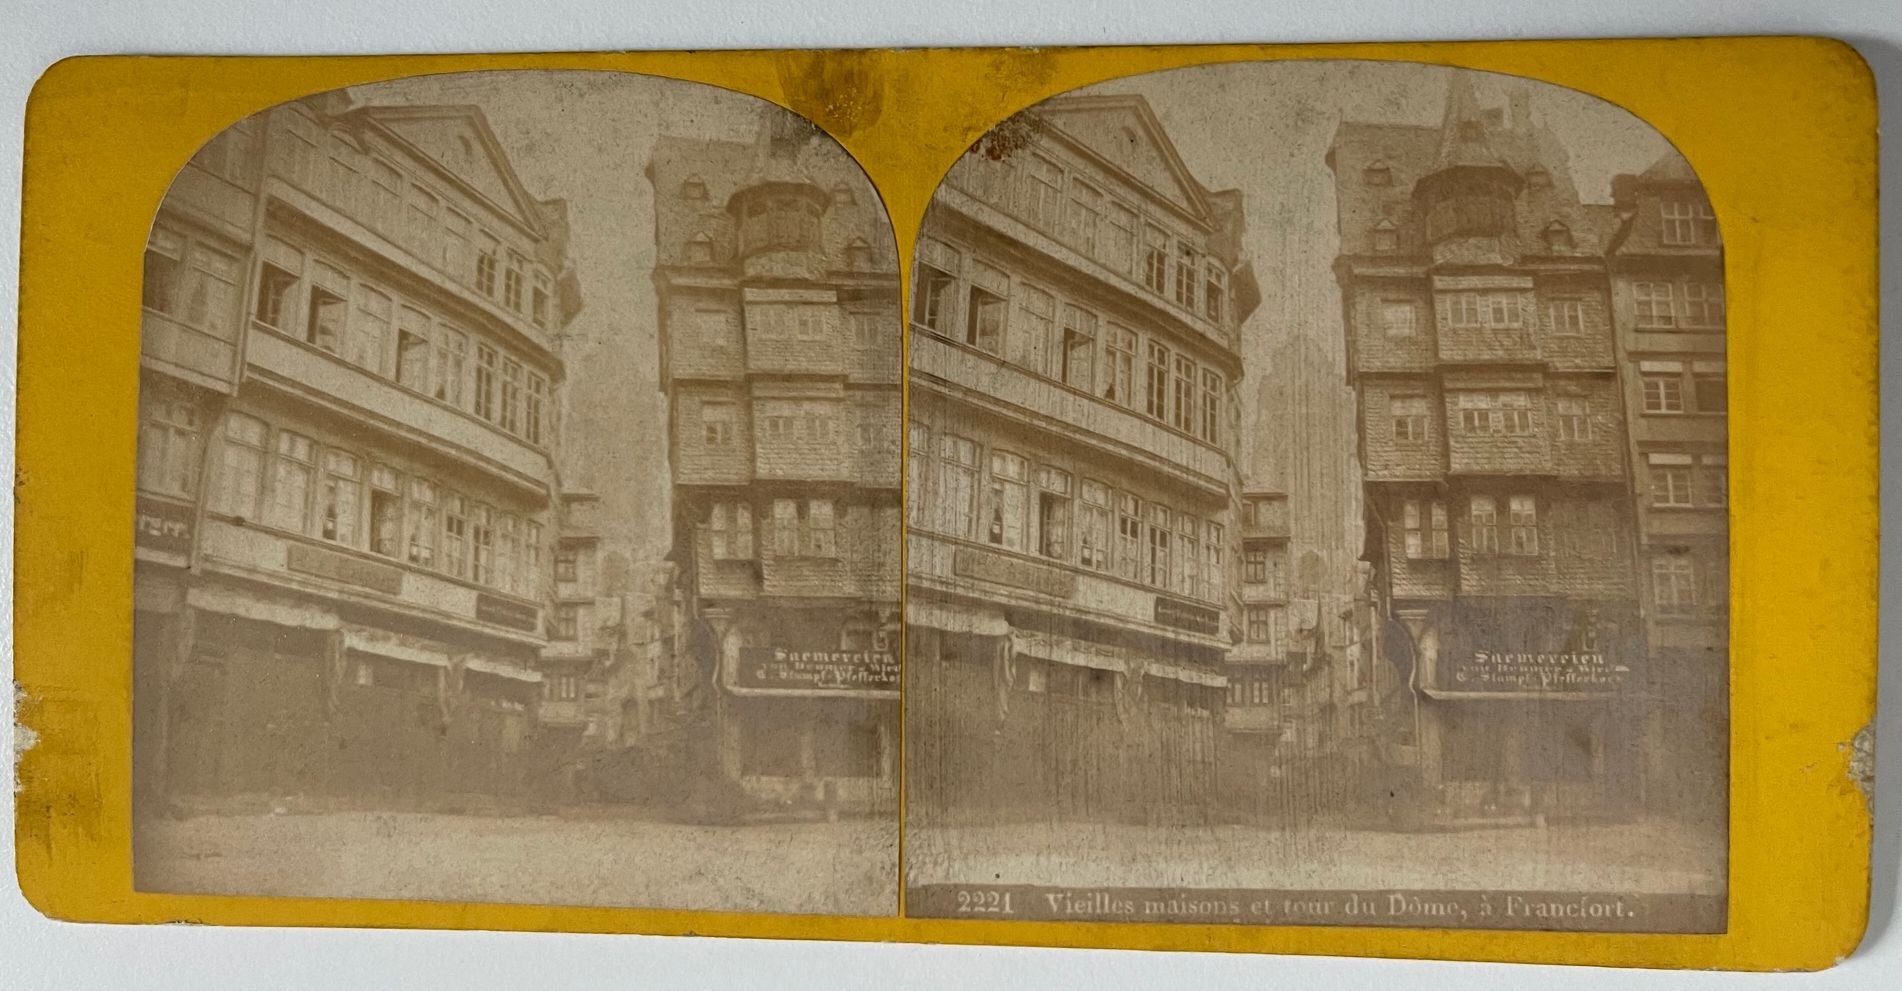 Frankfurt, Nr. 2221, Vieilles maisons et tour du Dome, a Francfort, ca. 1869. (Taunus-Rhein-Main - Regionalgeschichtliche Sammlung Dr. Stefan Naas CC BY-NC-SA)